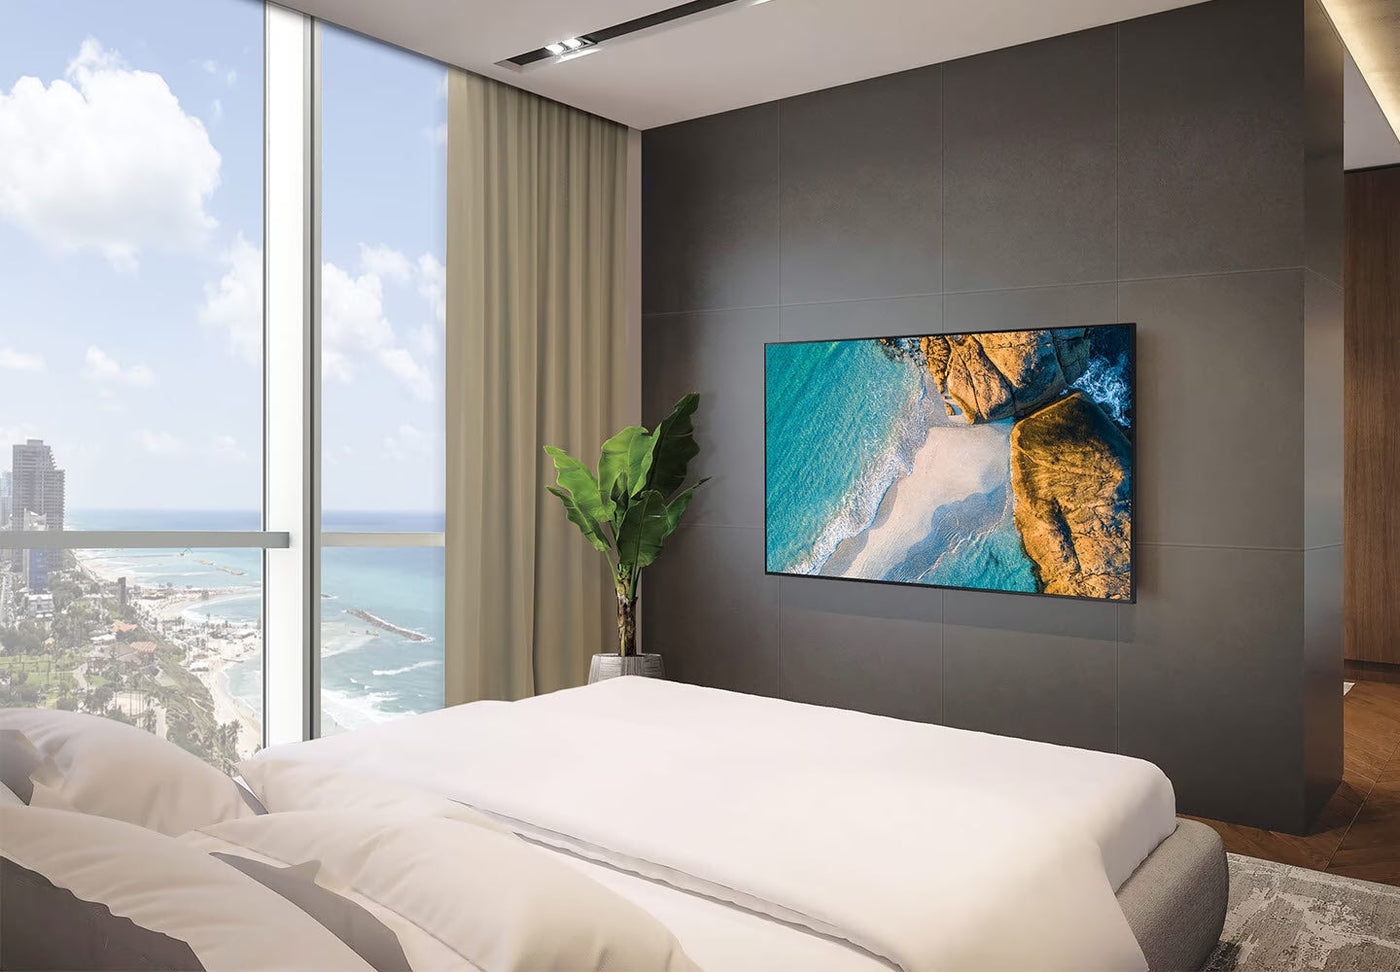 Samsung 50HCU7000 50" LED 4K Hotel TV with Crystal processor and Smart Hub